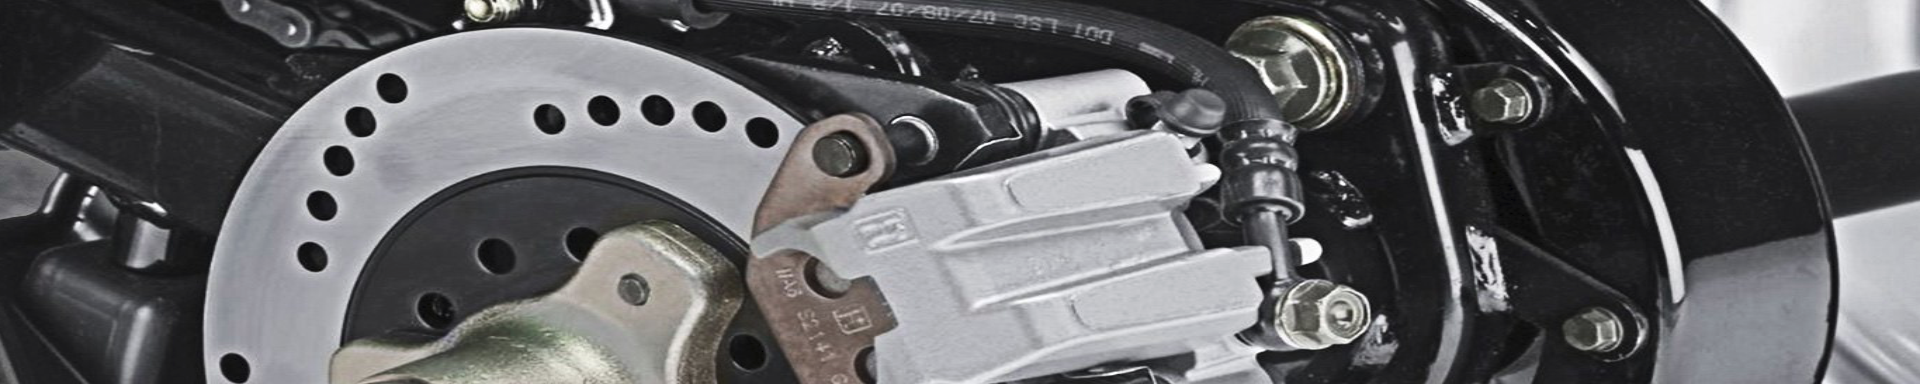 Brake Parts | MunroPowersports.com | Munro Industries mp-1008030803